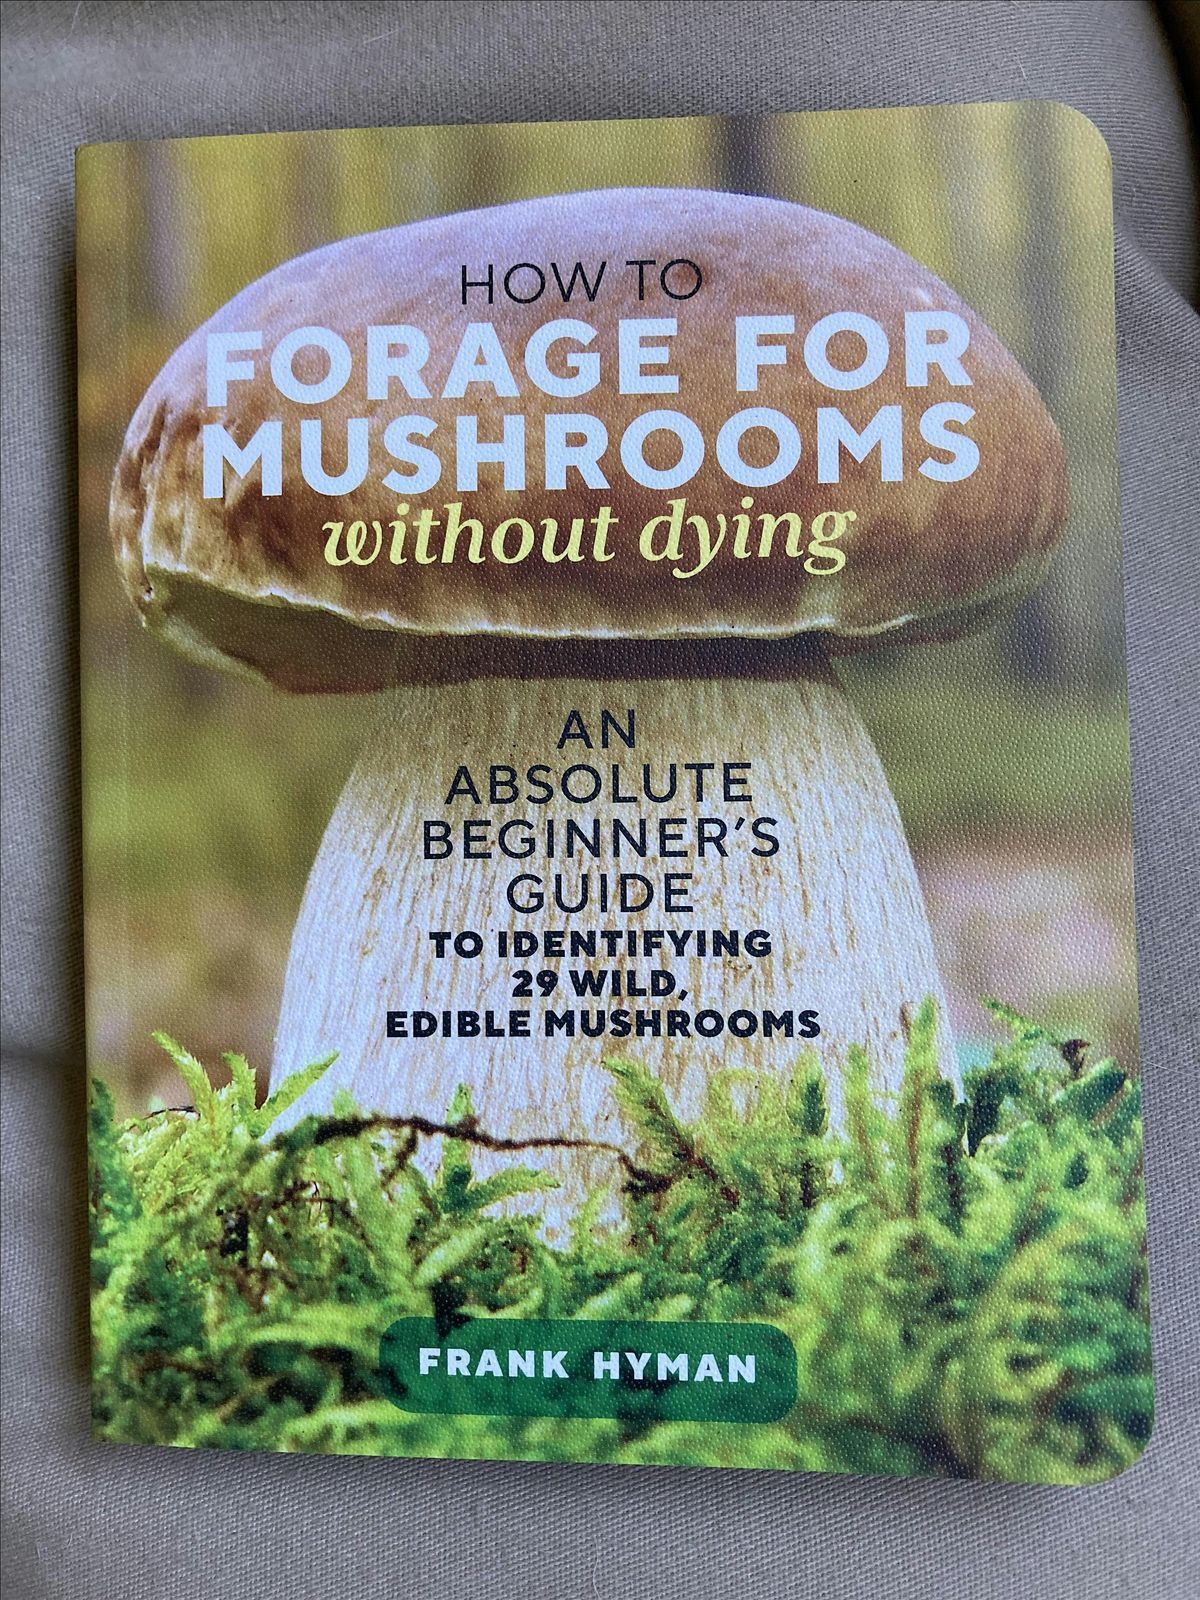 Intro to Foraging Wild, Edible Mushrooms